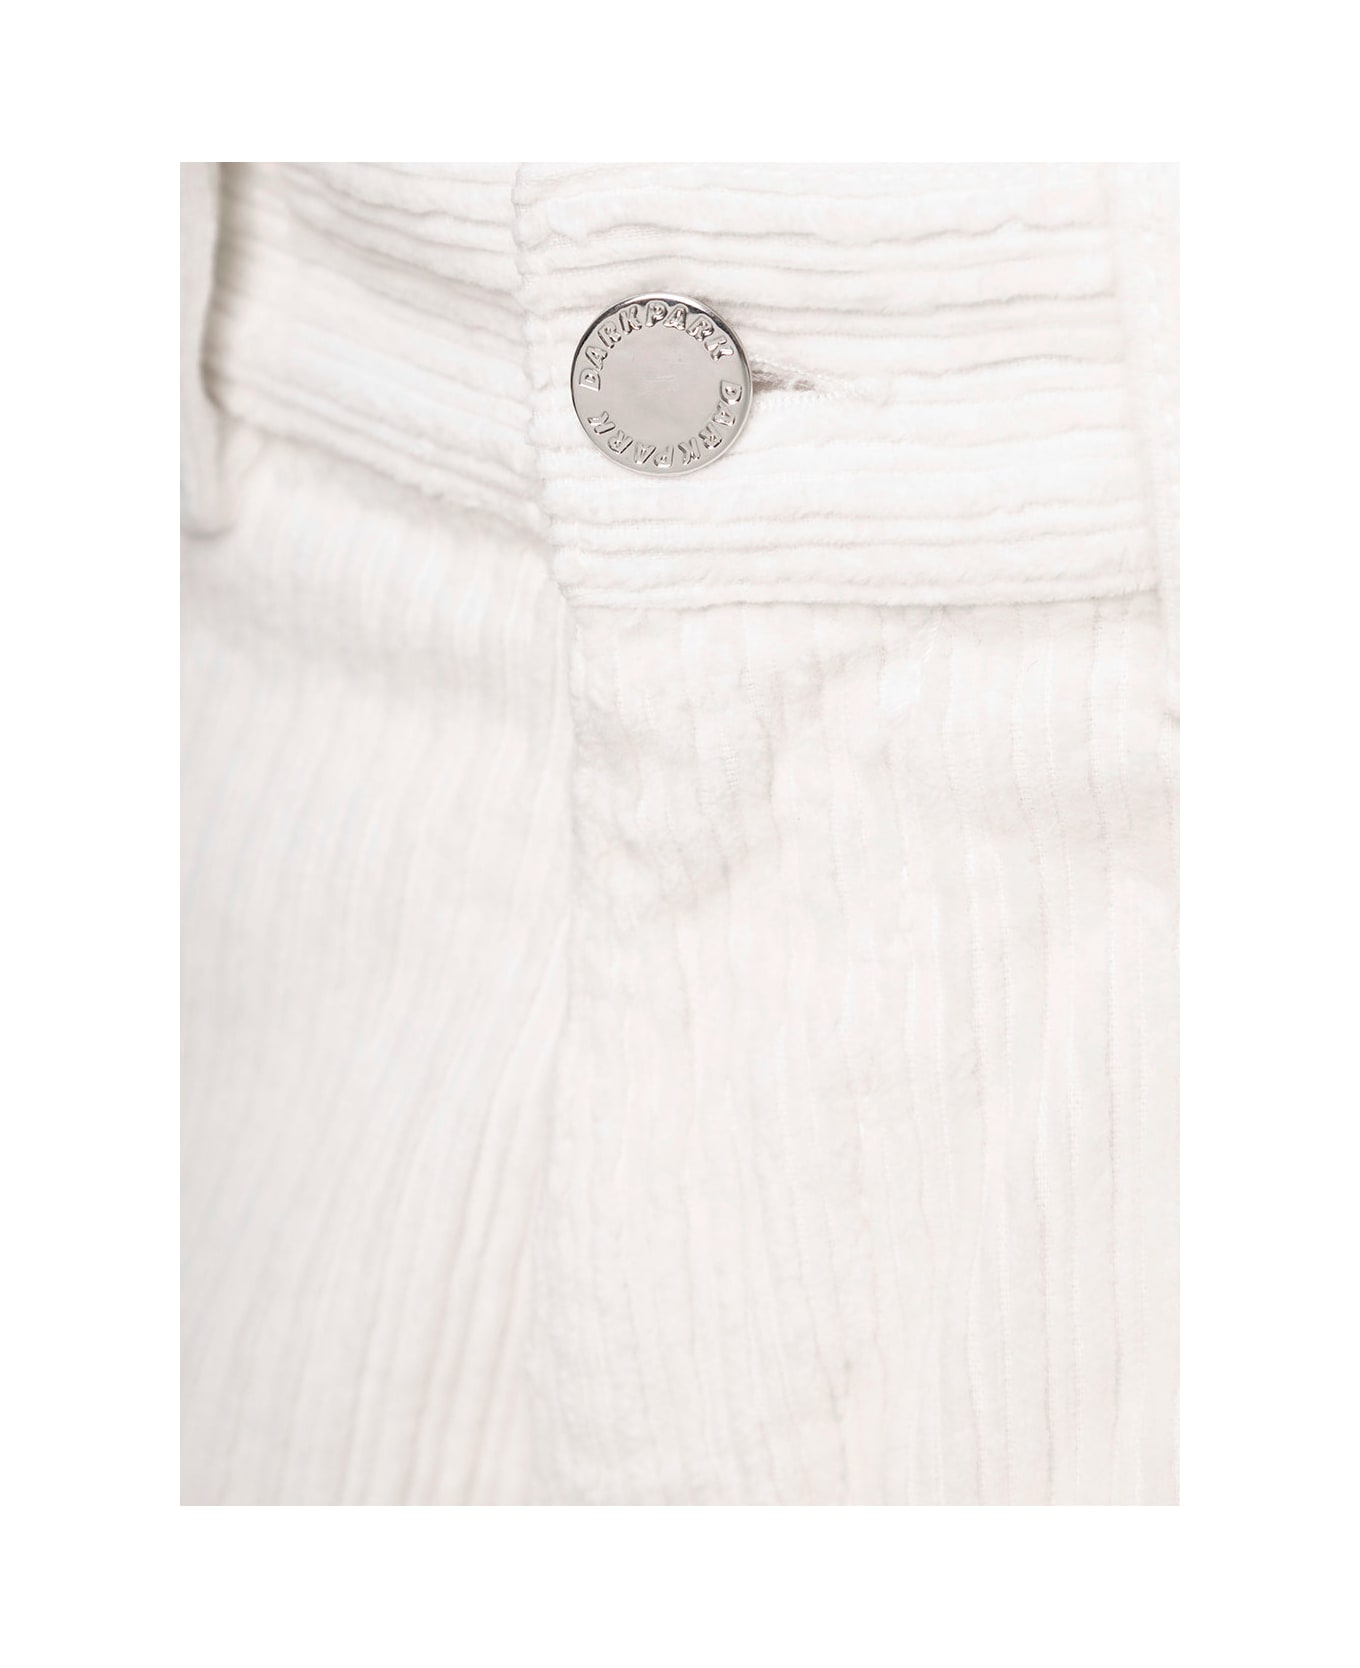 DARKPARK Audrey Garment Dyed Corduroy - Wht White